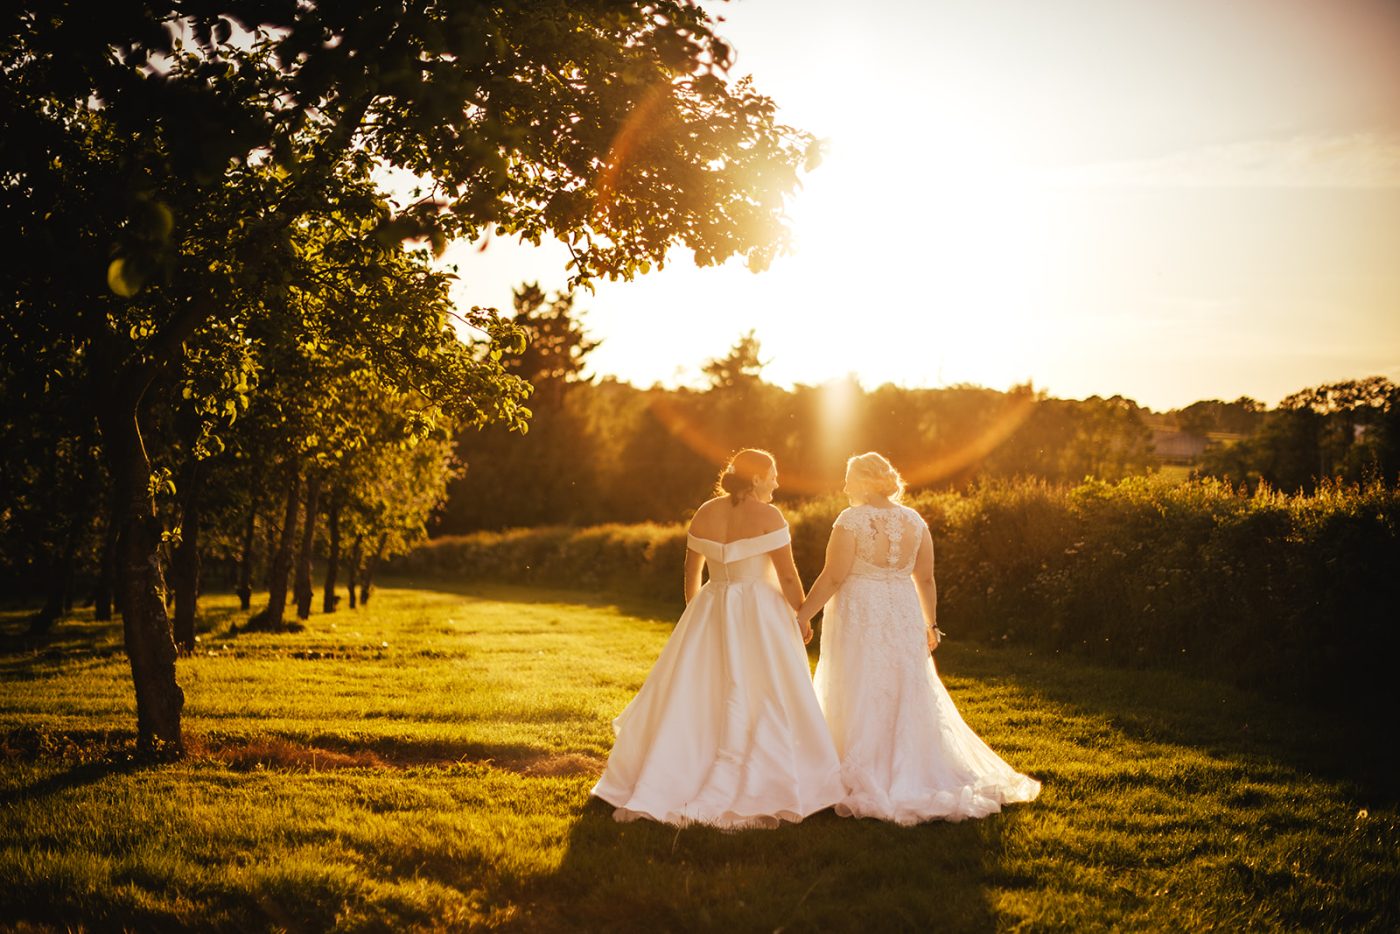 outdoor wedding venue, tipi wedding, wedding venues herefordshire uk, the orchard wedding venue, countryside wedding